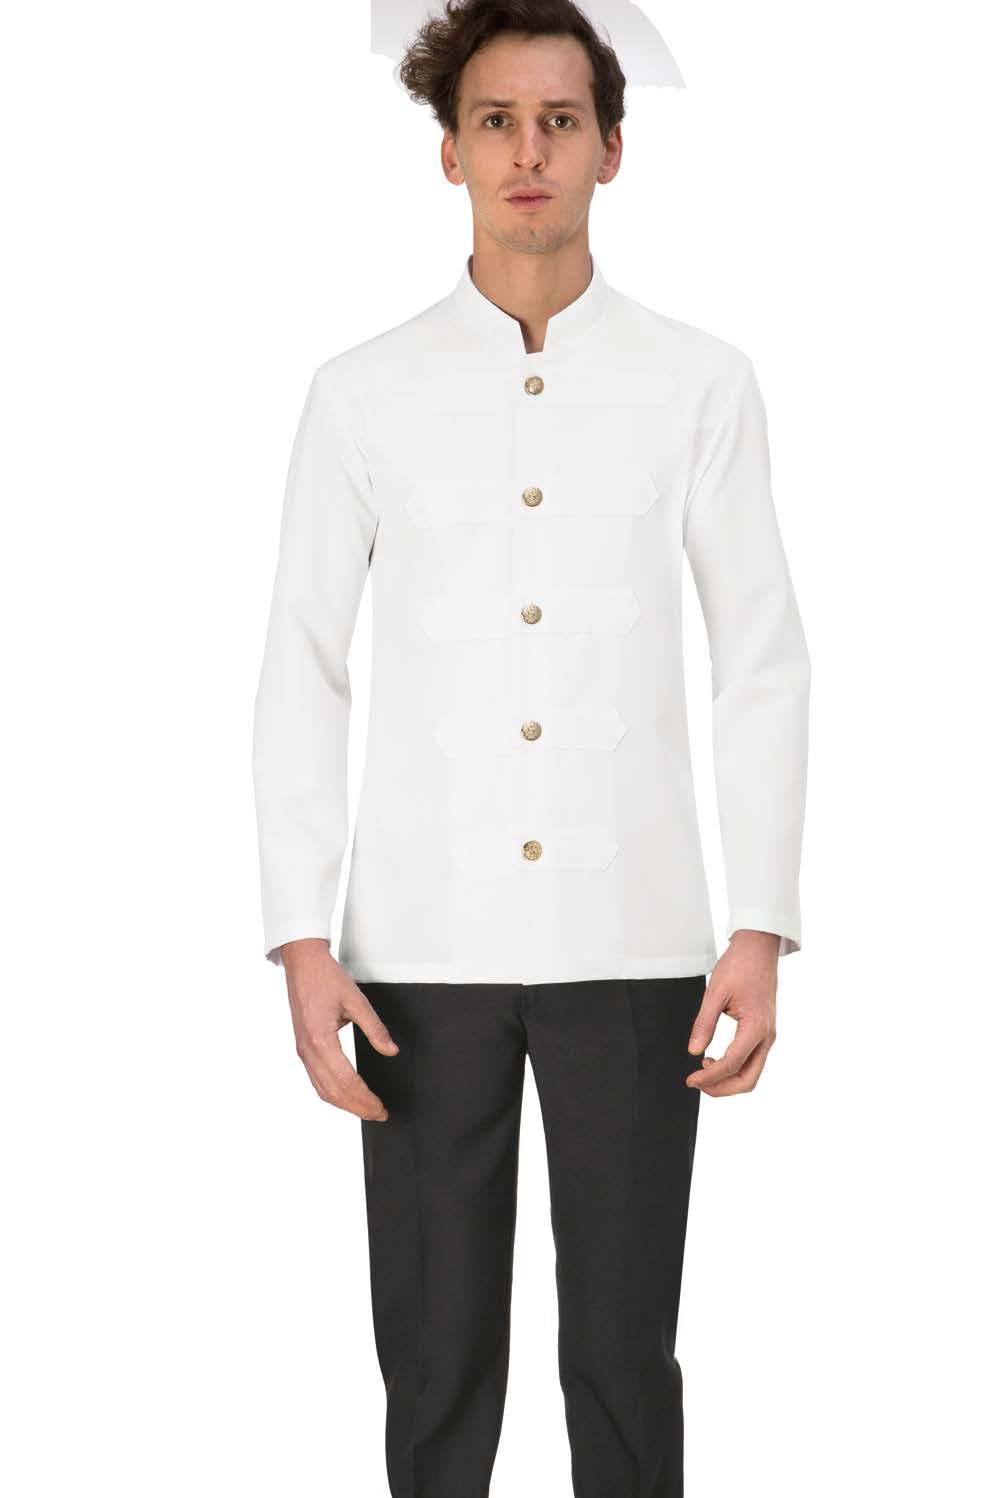 Coreane / Mandarin collar jackets Art. 138 GIACCA PIER PIER JACKET 00 Bianco / White 100% poliestere 100% polyester 220 g / m 2 Art.